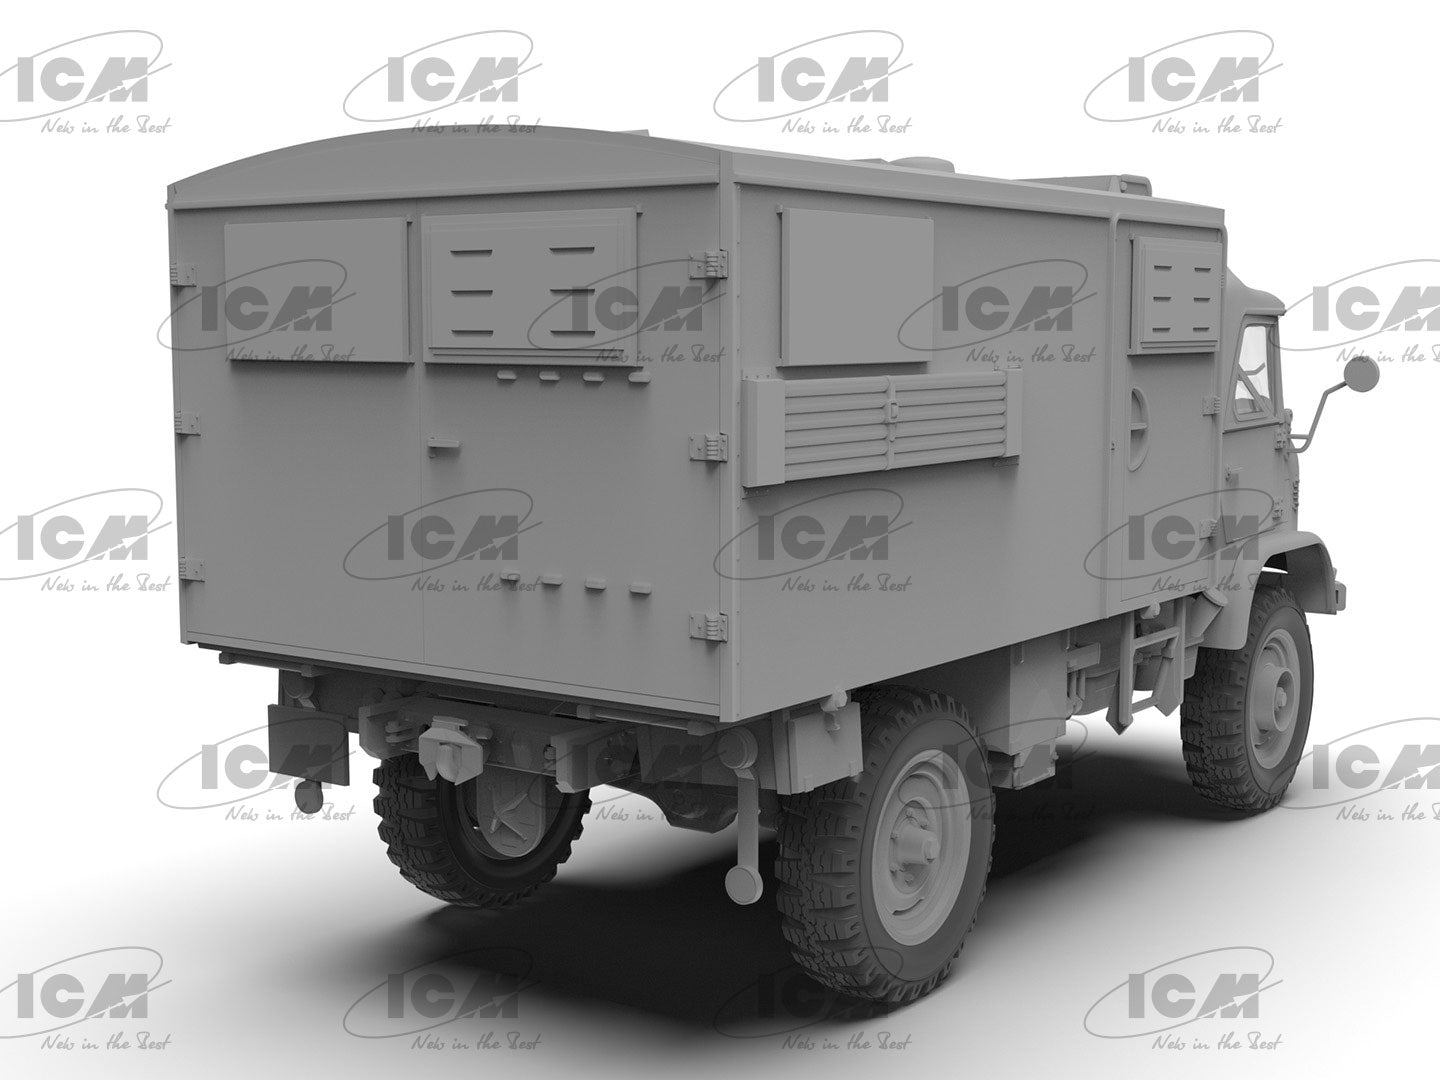 ICM 1/35th scale Unimog S 404 with Box Body